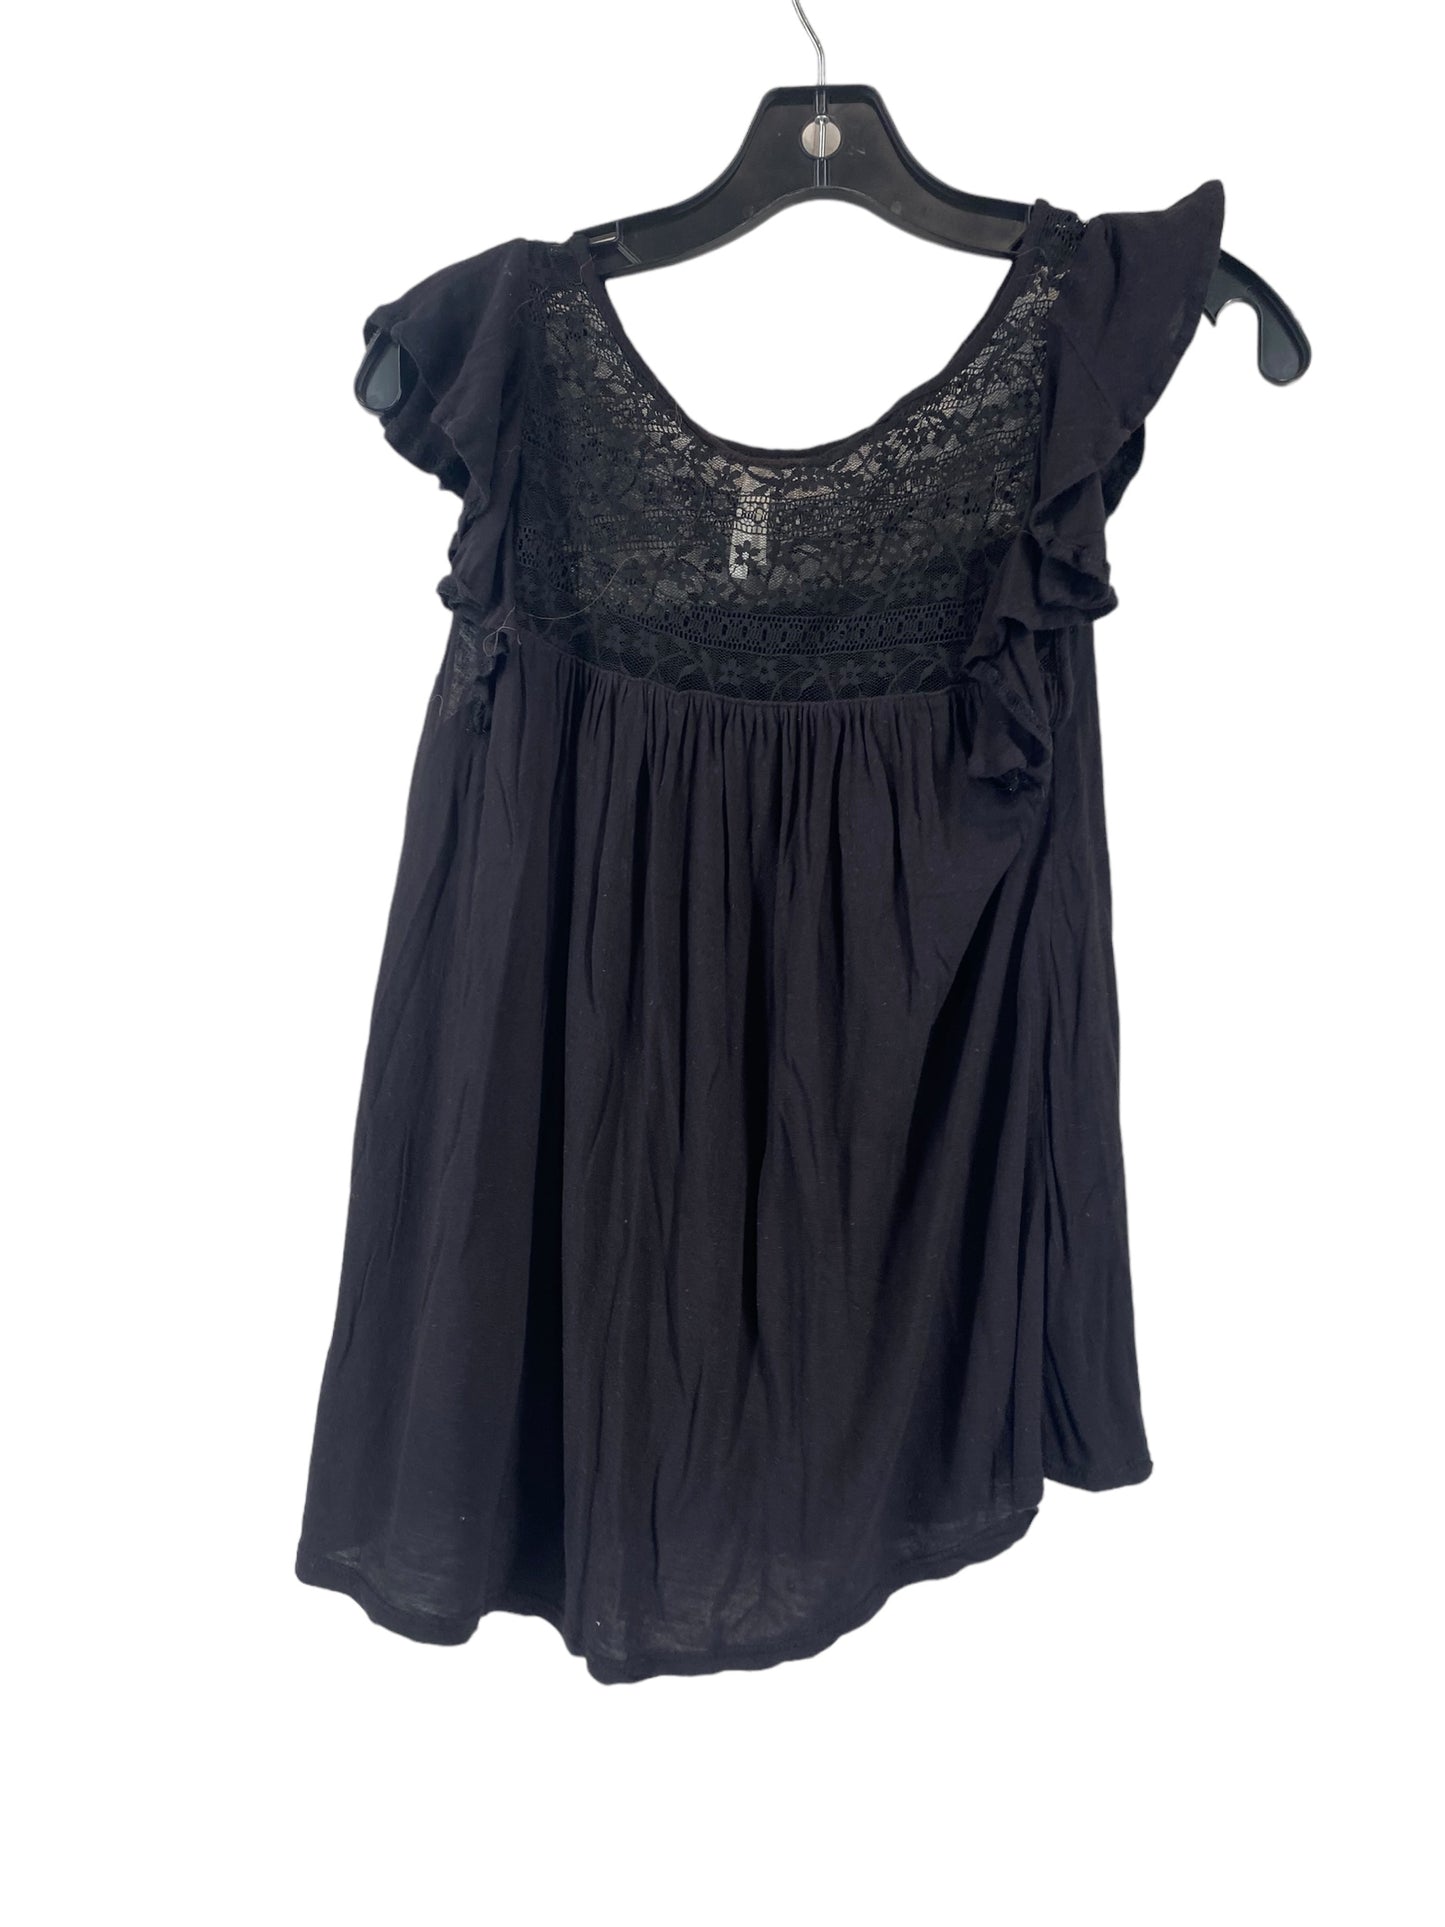 Black Top Sleeveless Clothes Mentor, Size S